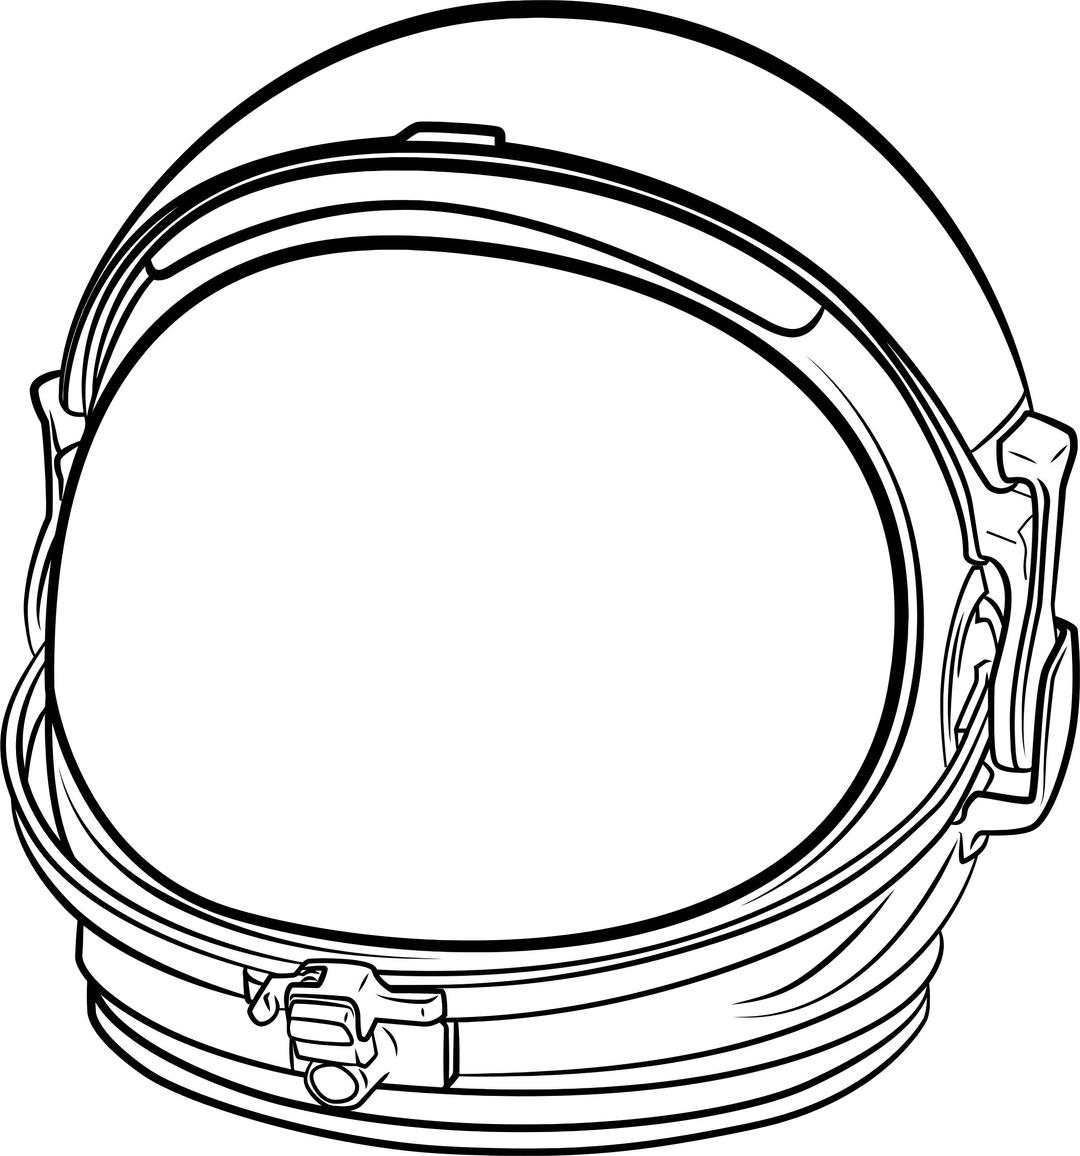 Astronaut Helmet Line Art png transparent